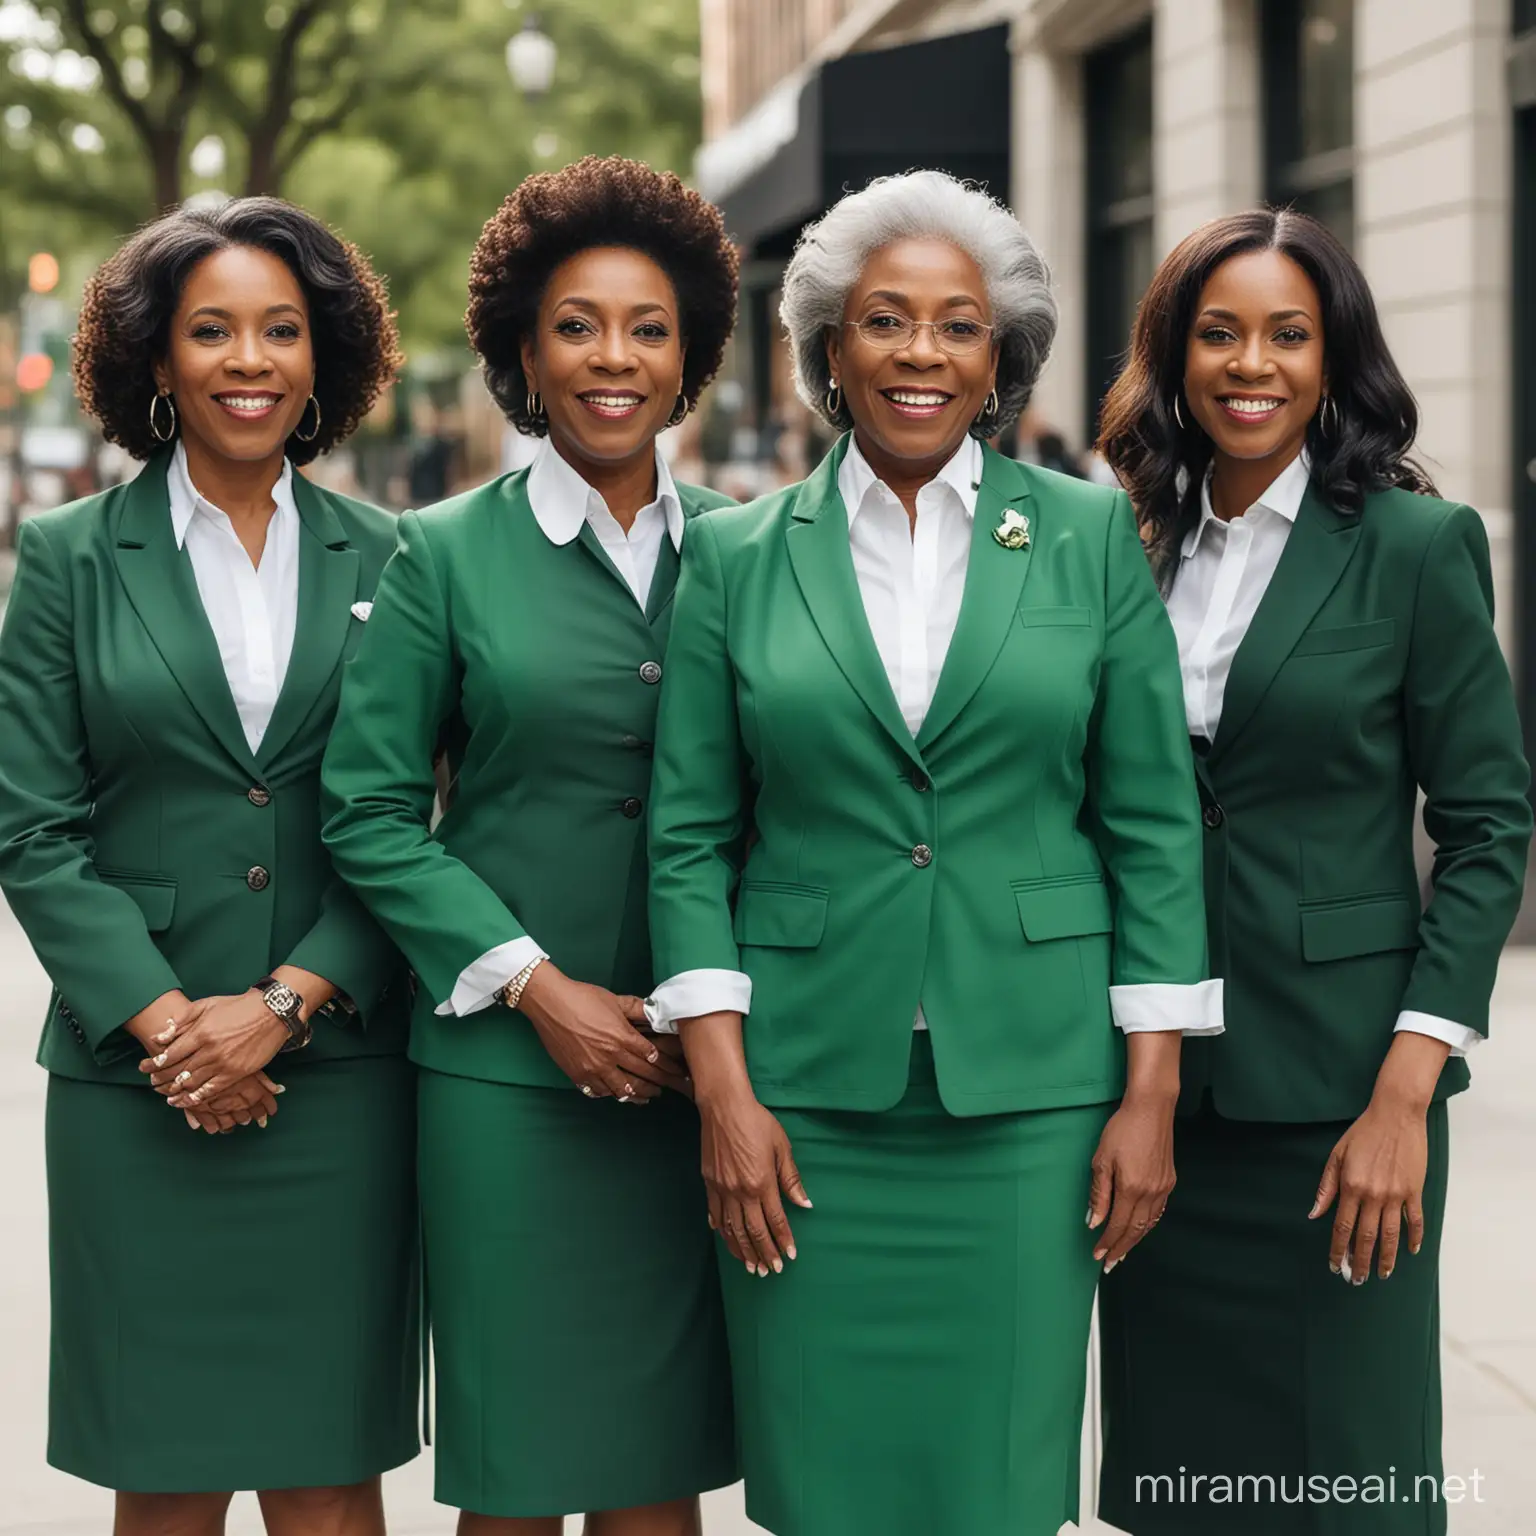 Elegant Senior African American Women in Emerald Green and White Business Attire